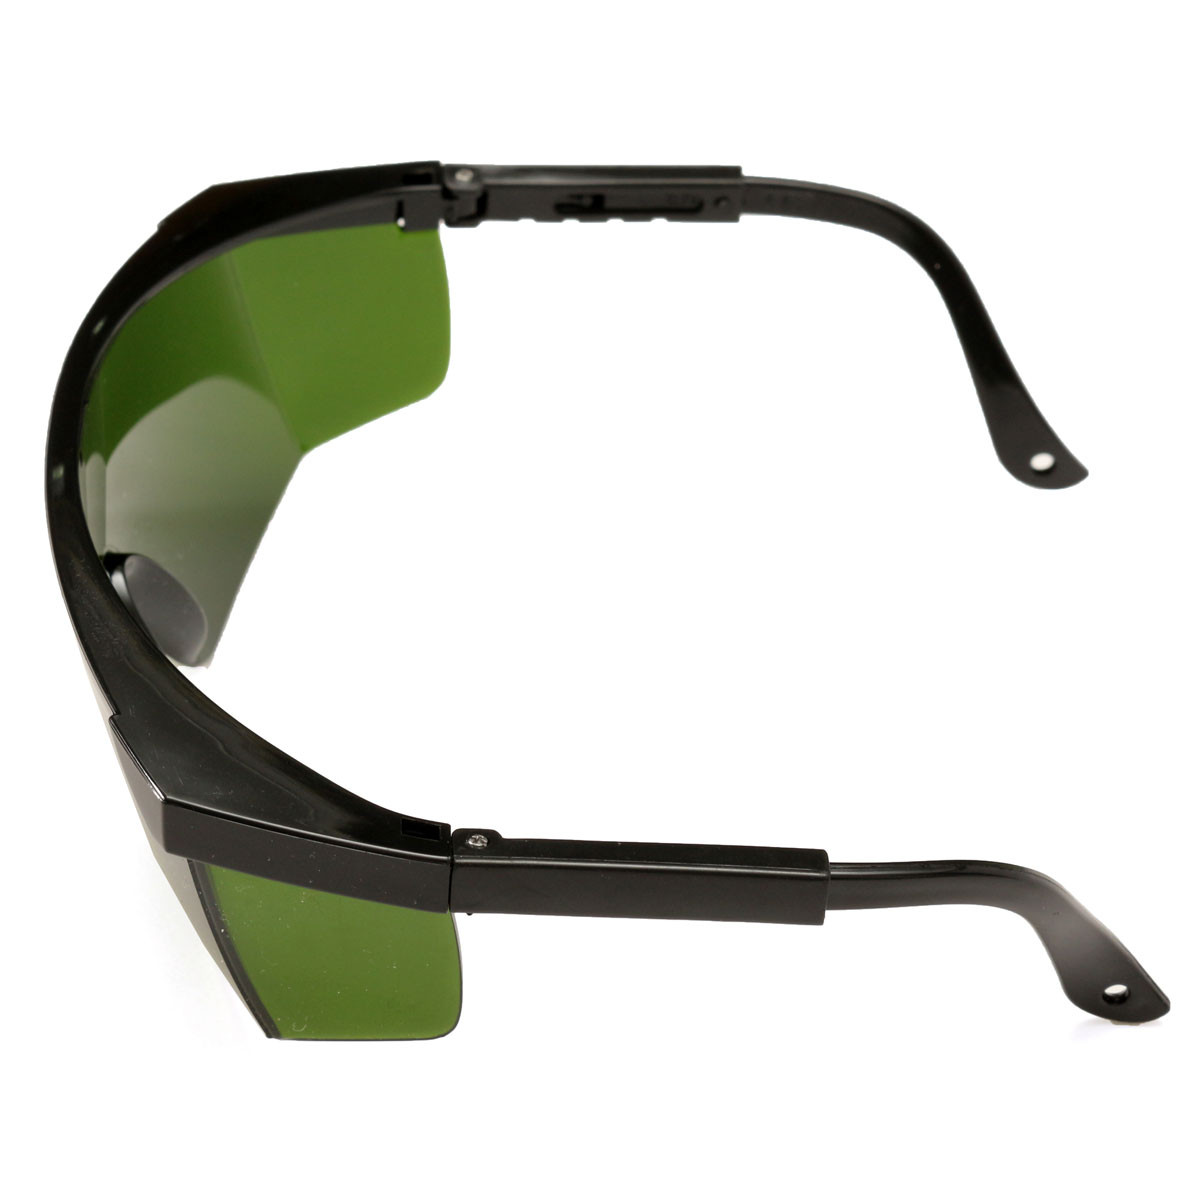 360nm-1064nm Laser Protection Goggles Glasses IPL-2 OD+4D For Laser 12